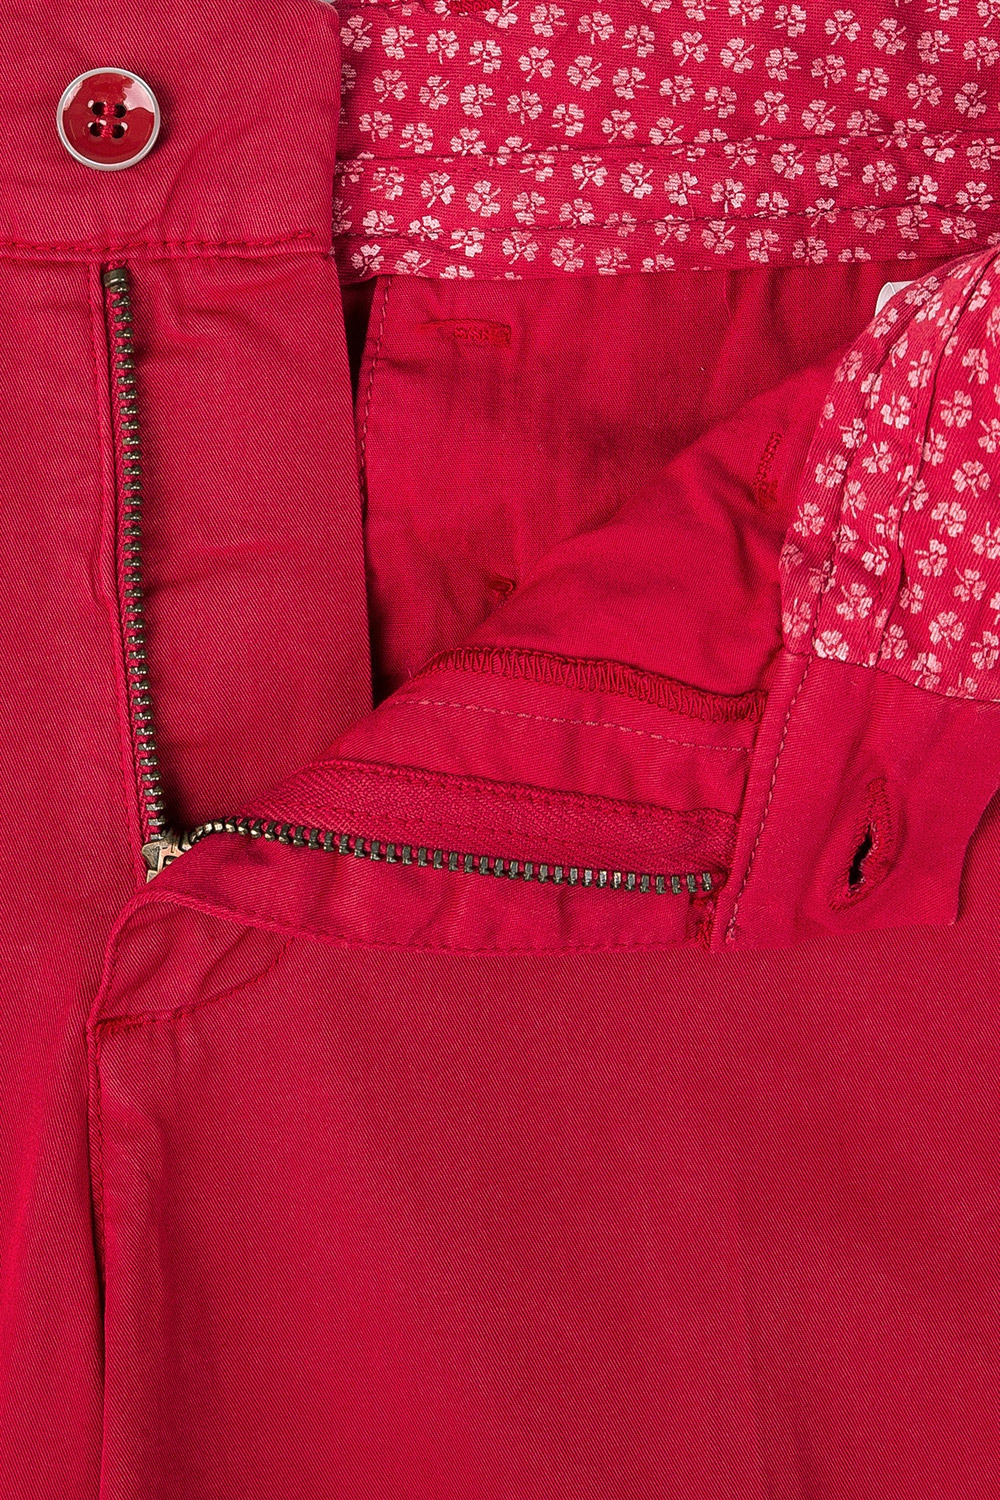 Pantaloni superslim trento rosii uni 2